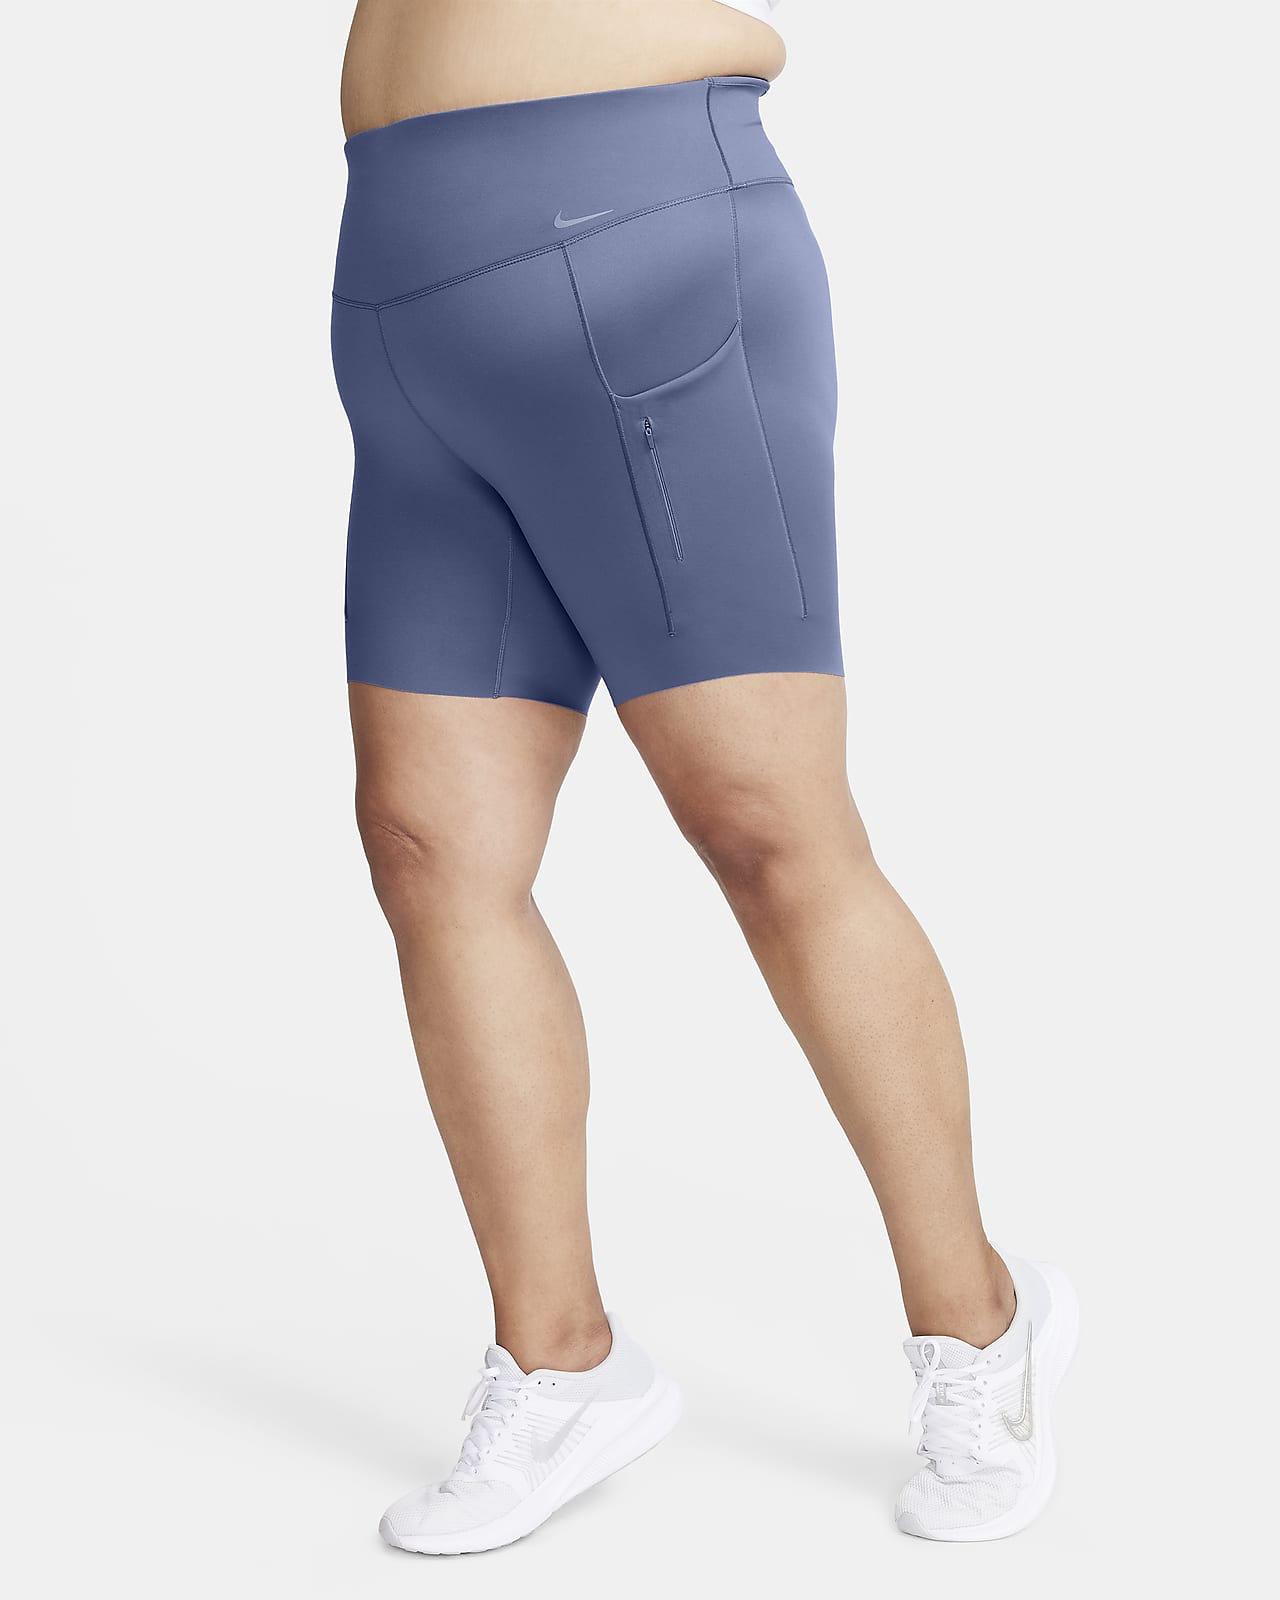 Lids Denver Broncos Certo Women's High Waist Logo Two-Pocket Biker Shorts -  Navy